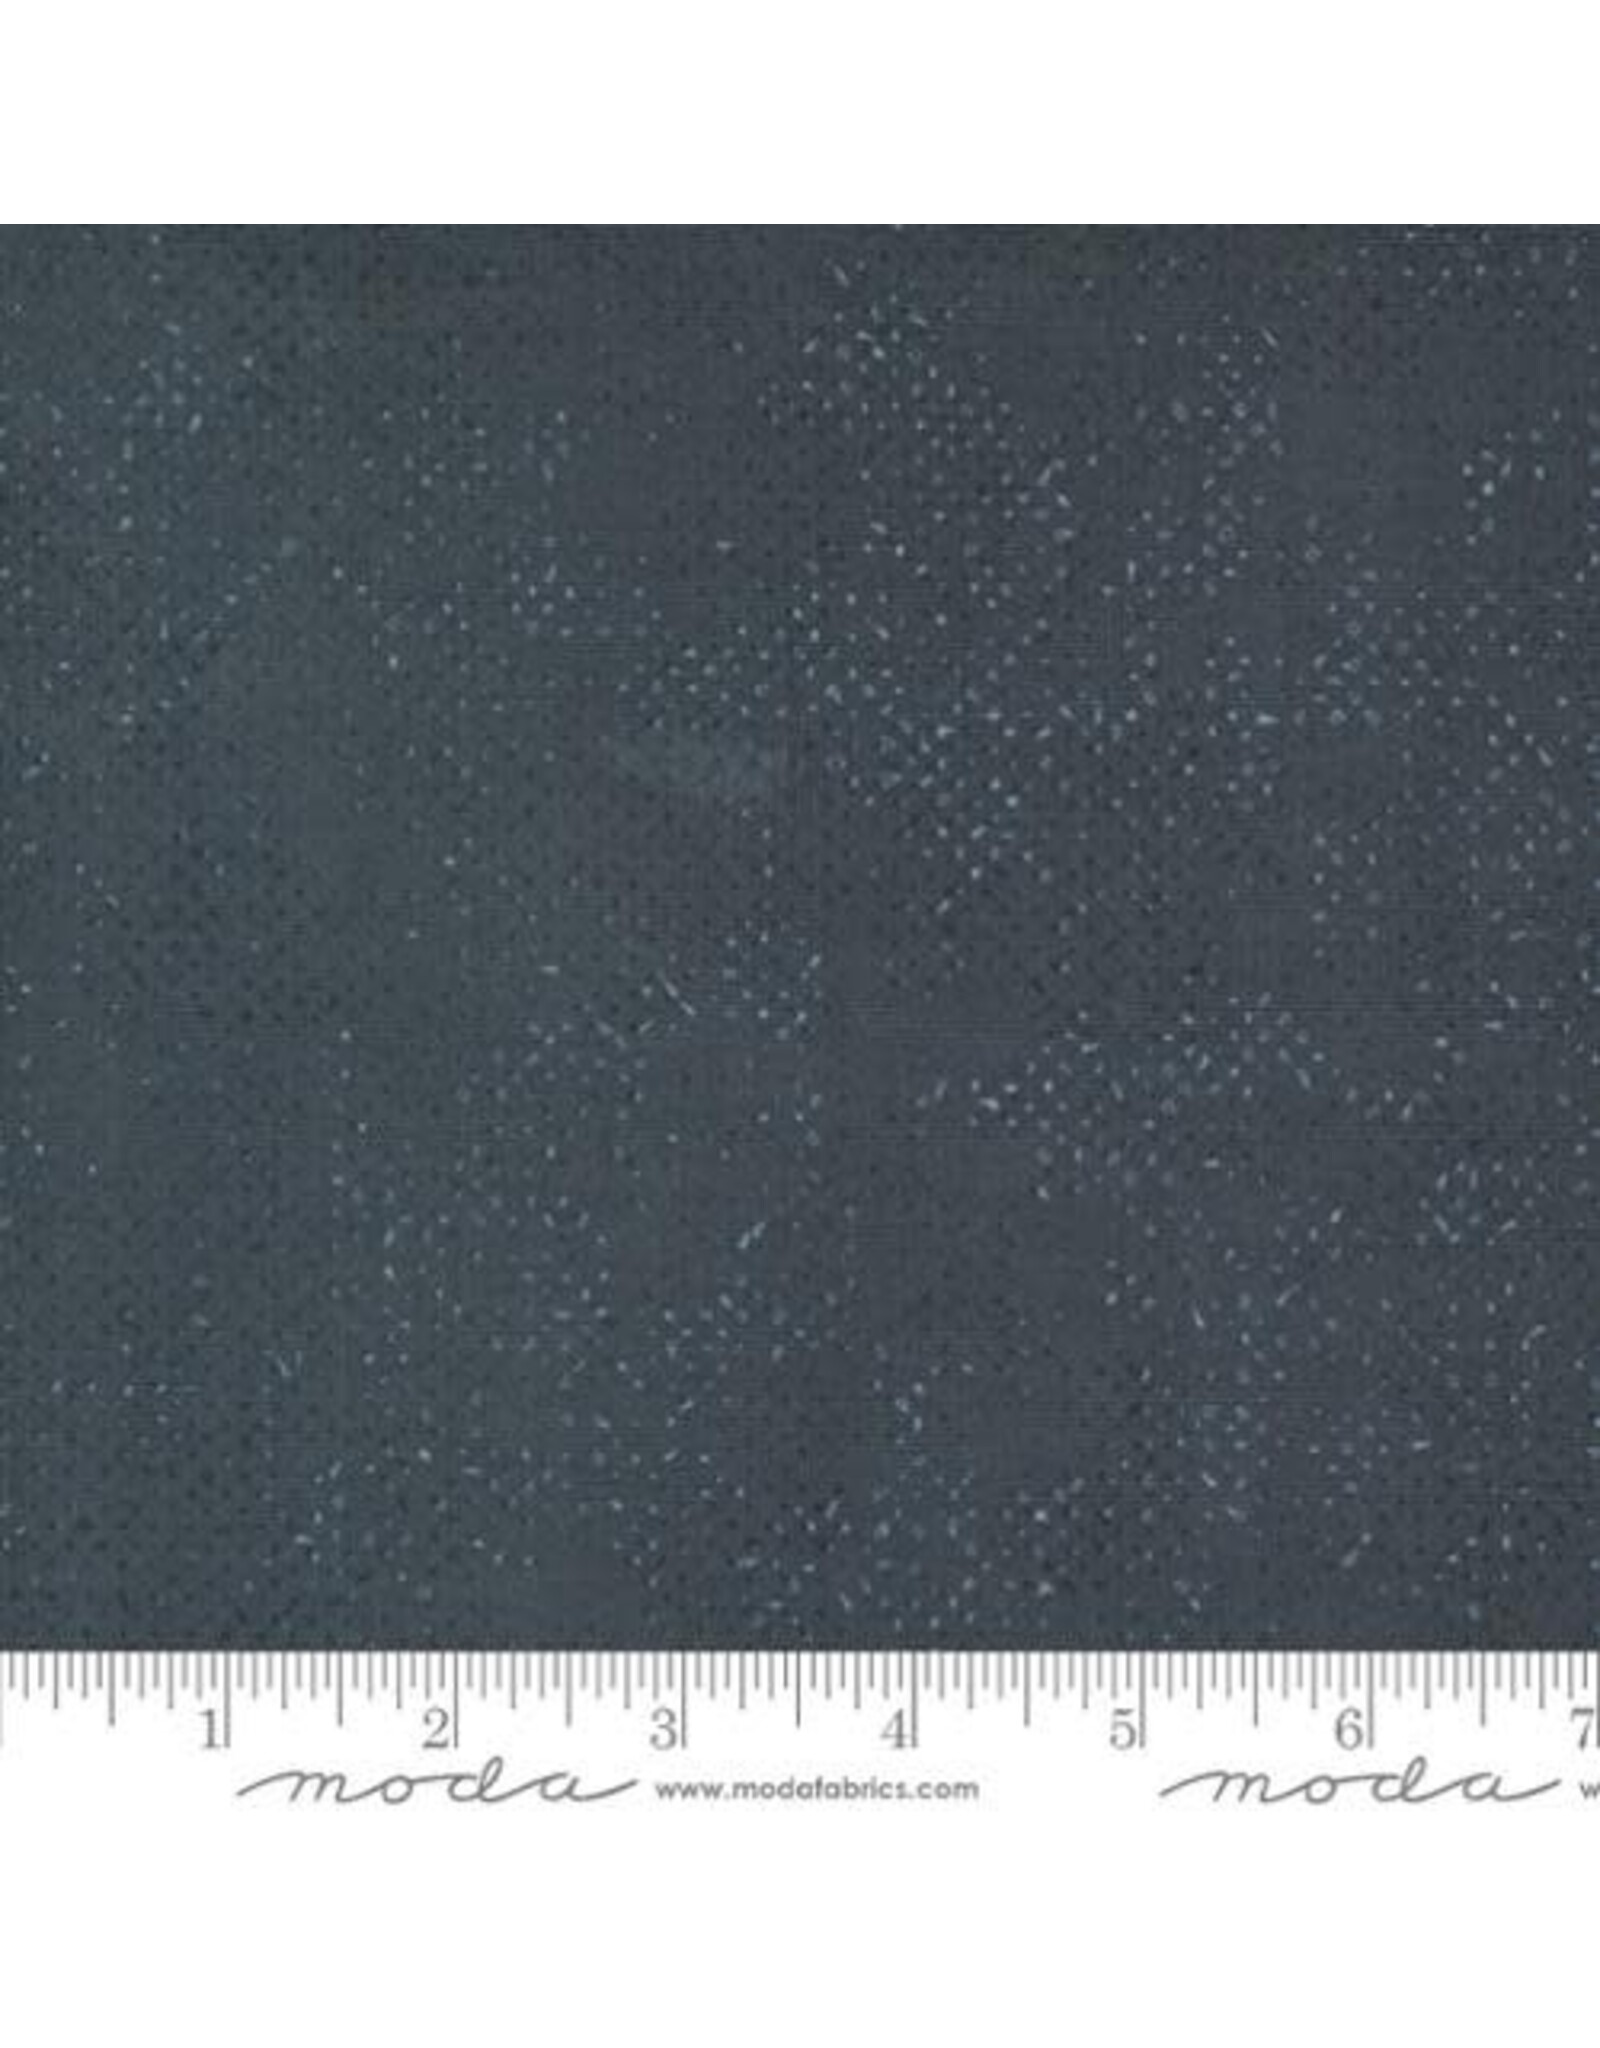 Moda Zen Chic - Bluish - Spotted Blackboard - 1660 210